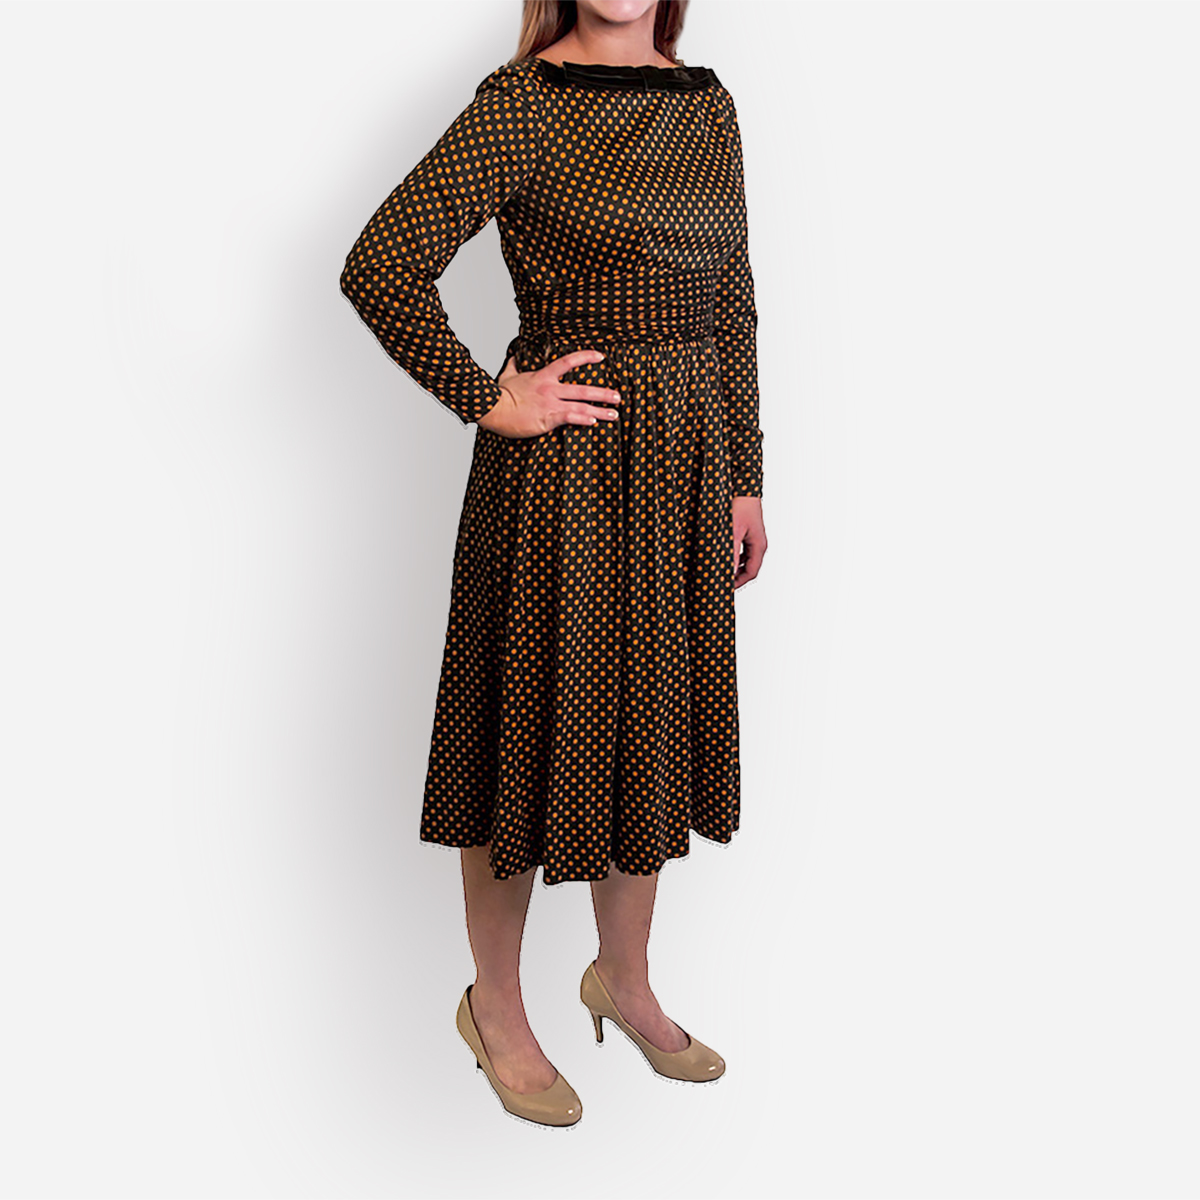 vintage 1950s Jean Lang Dress polka dot dress